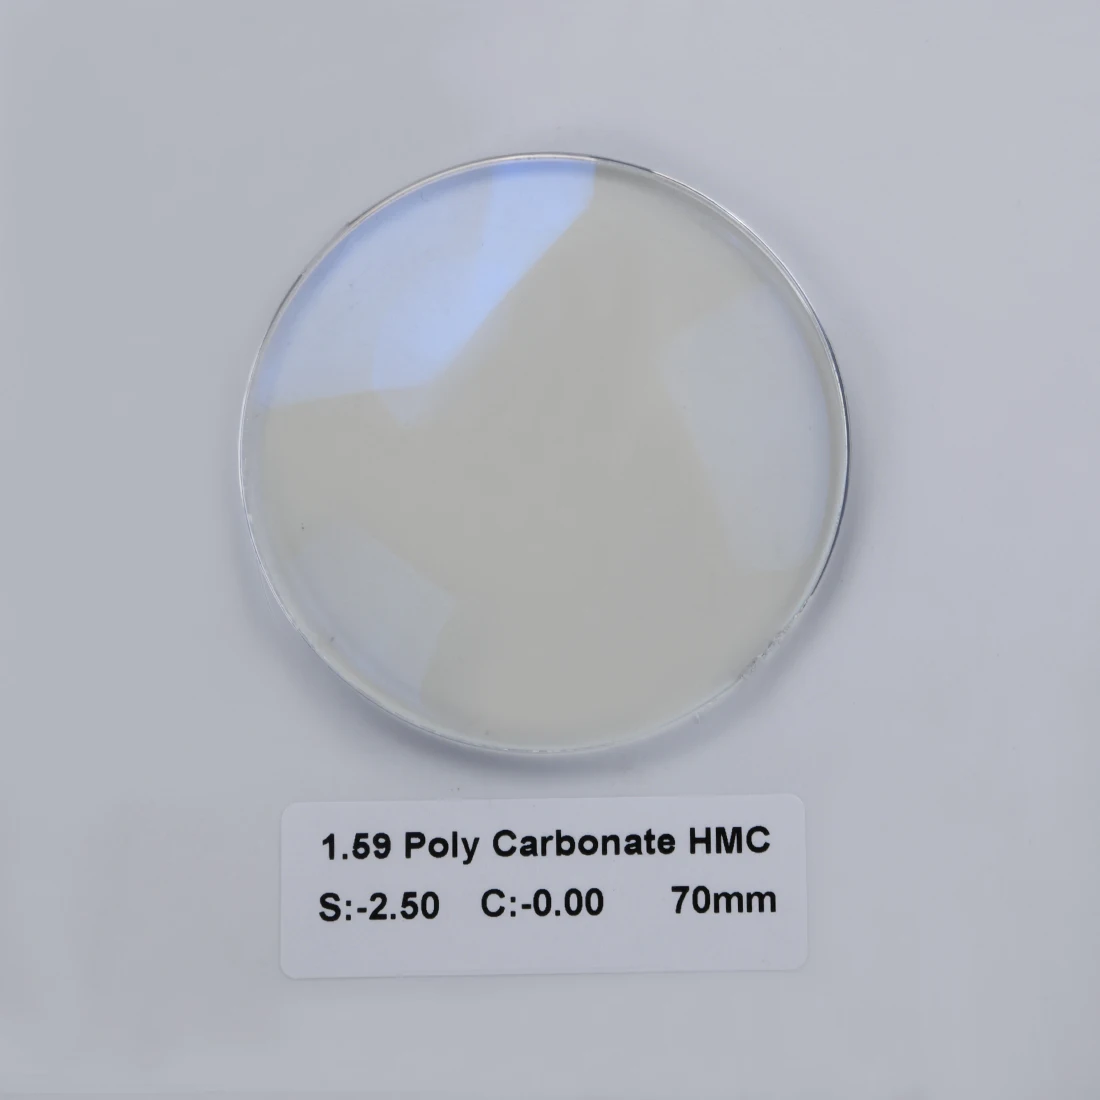 Customized New lens 70 65MM 1.59 polycarbonate HMC+EMI clear  lenses single vision optical lens